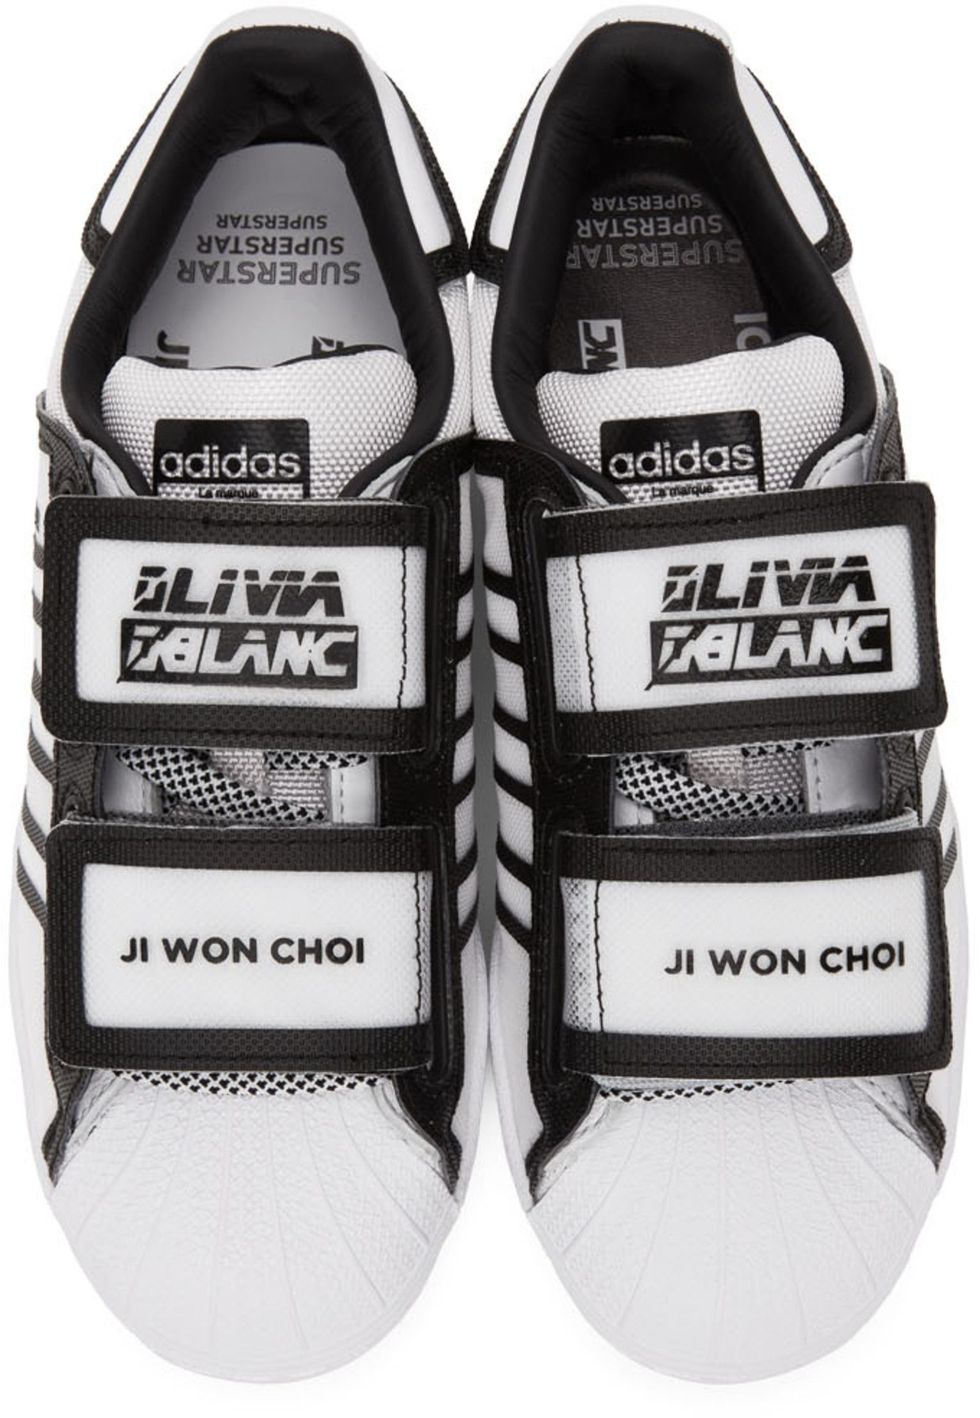 adidas Originals Ji Won Choi & Olivia Blanc Superstar 運動鞋